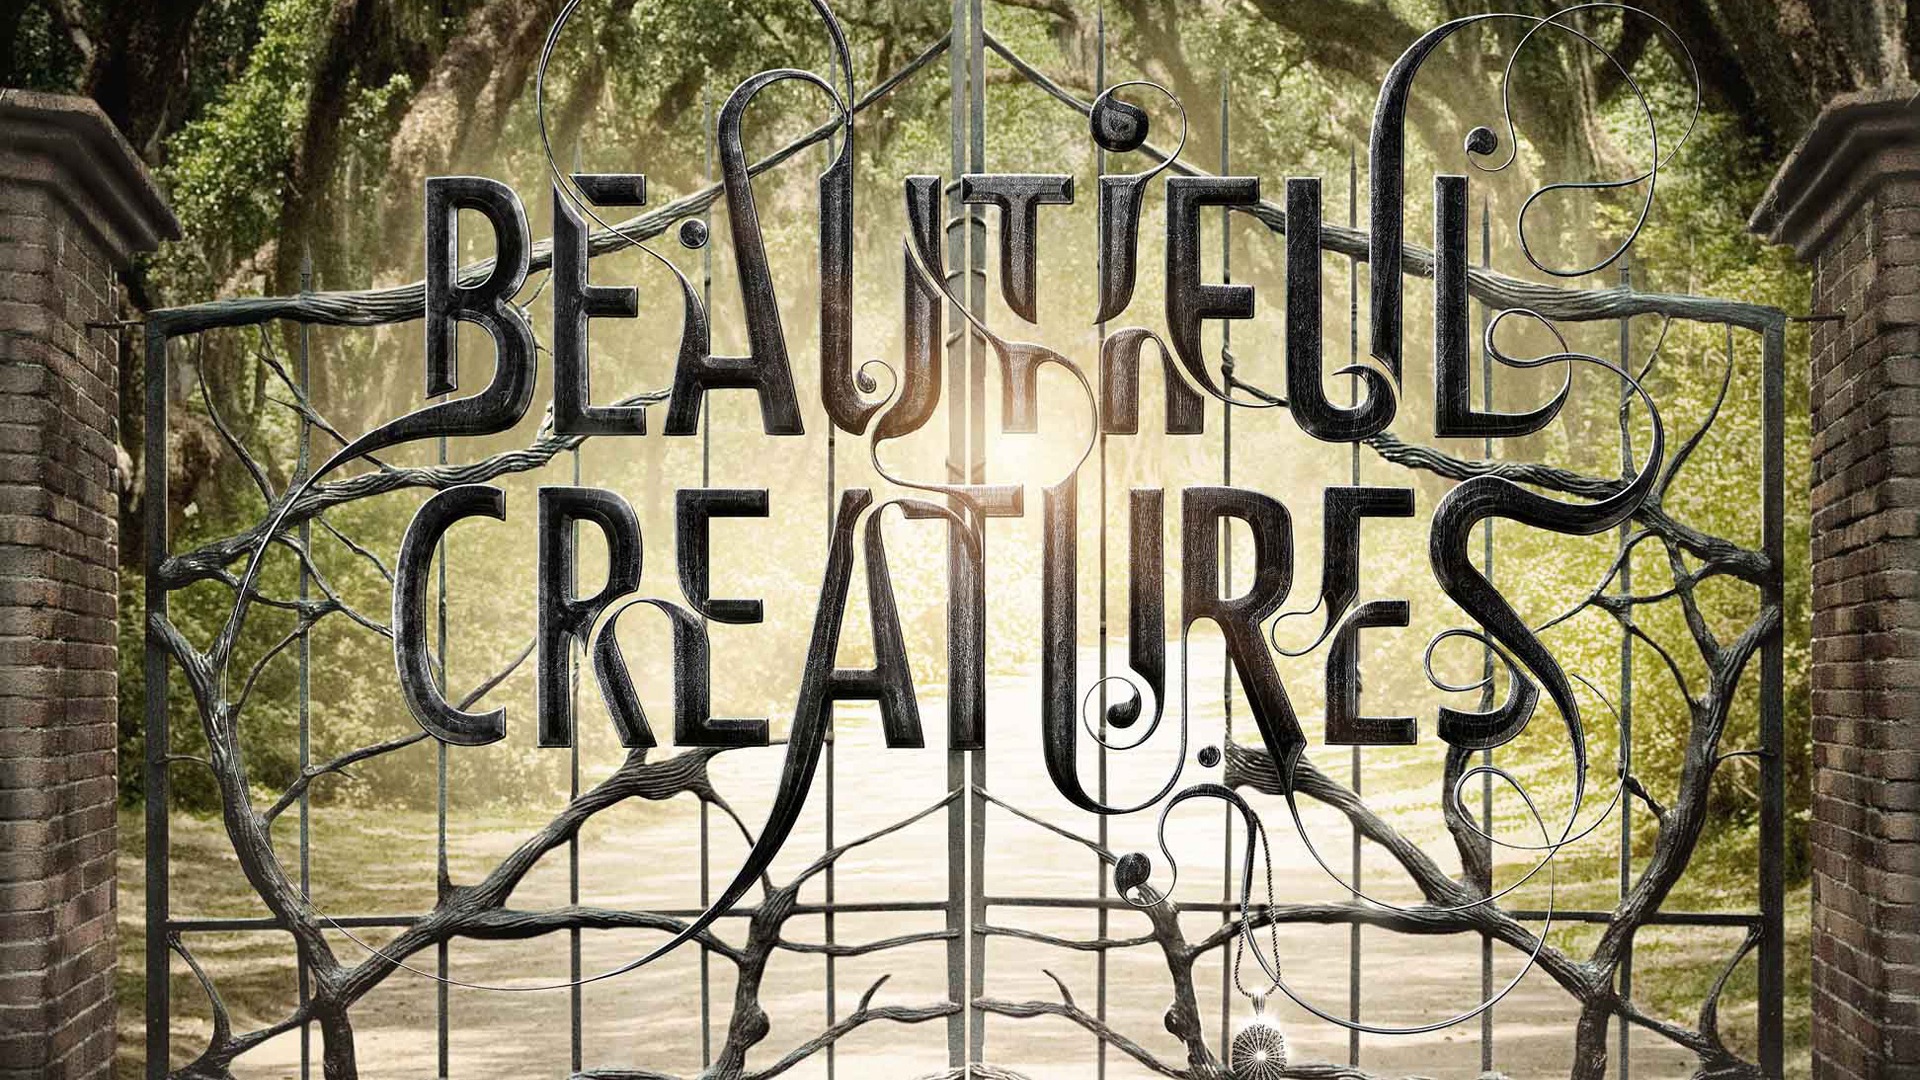 Beautiful Creatures 美丽生灵 2013 高清影视壁纸3 - 1920x1080